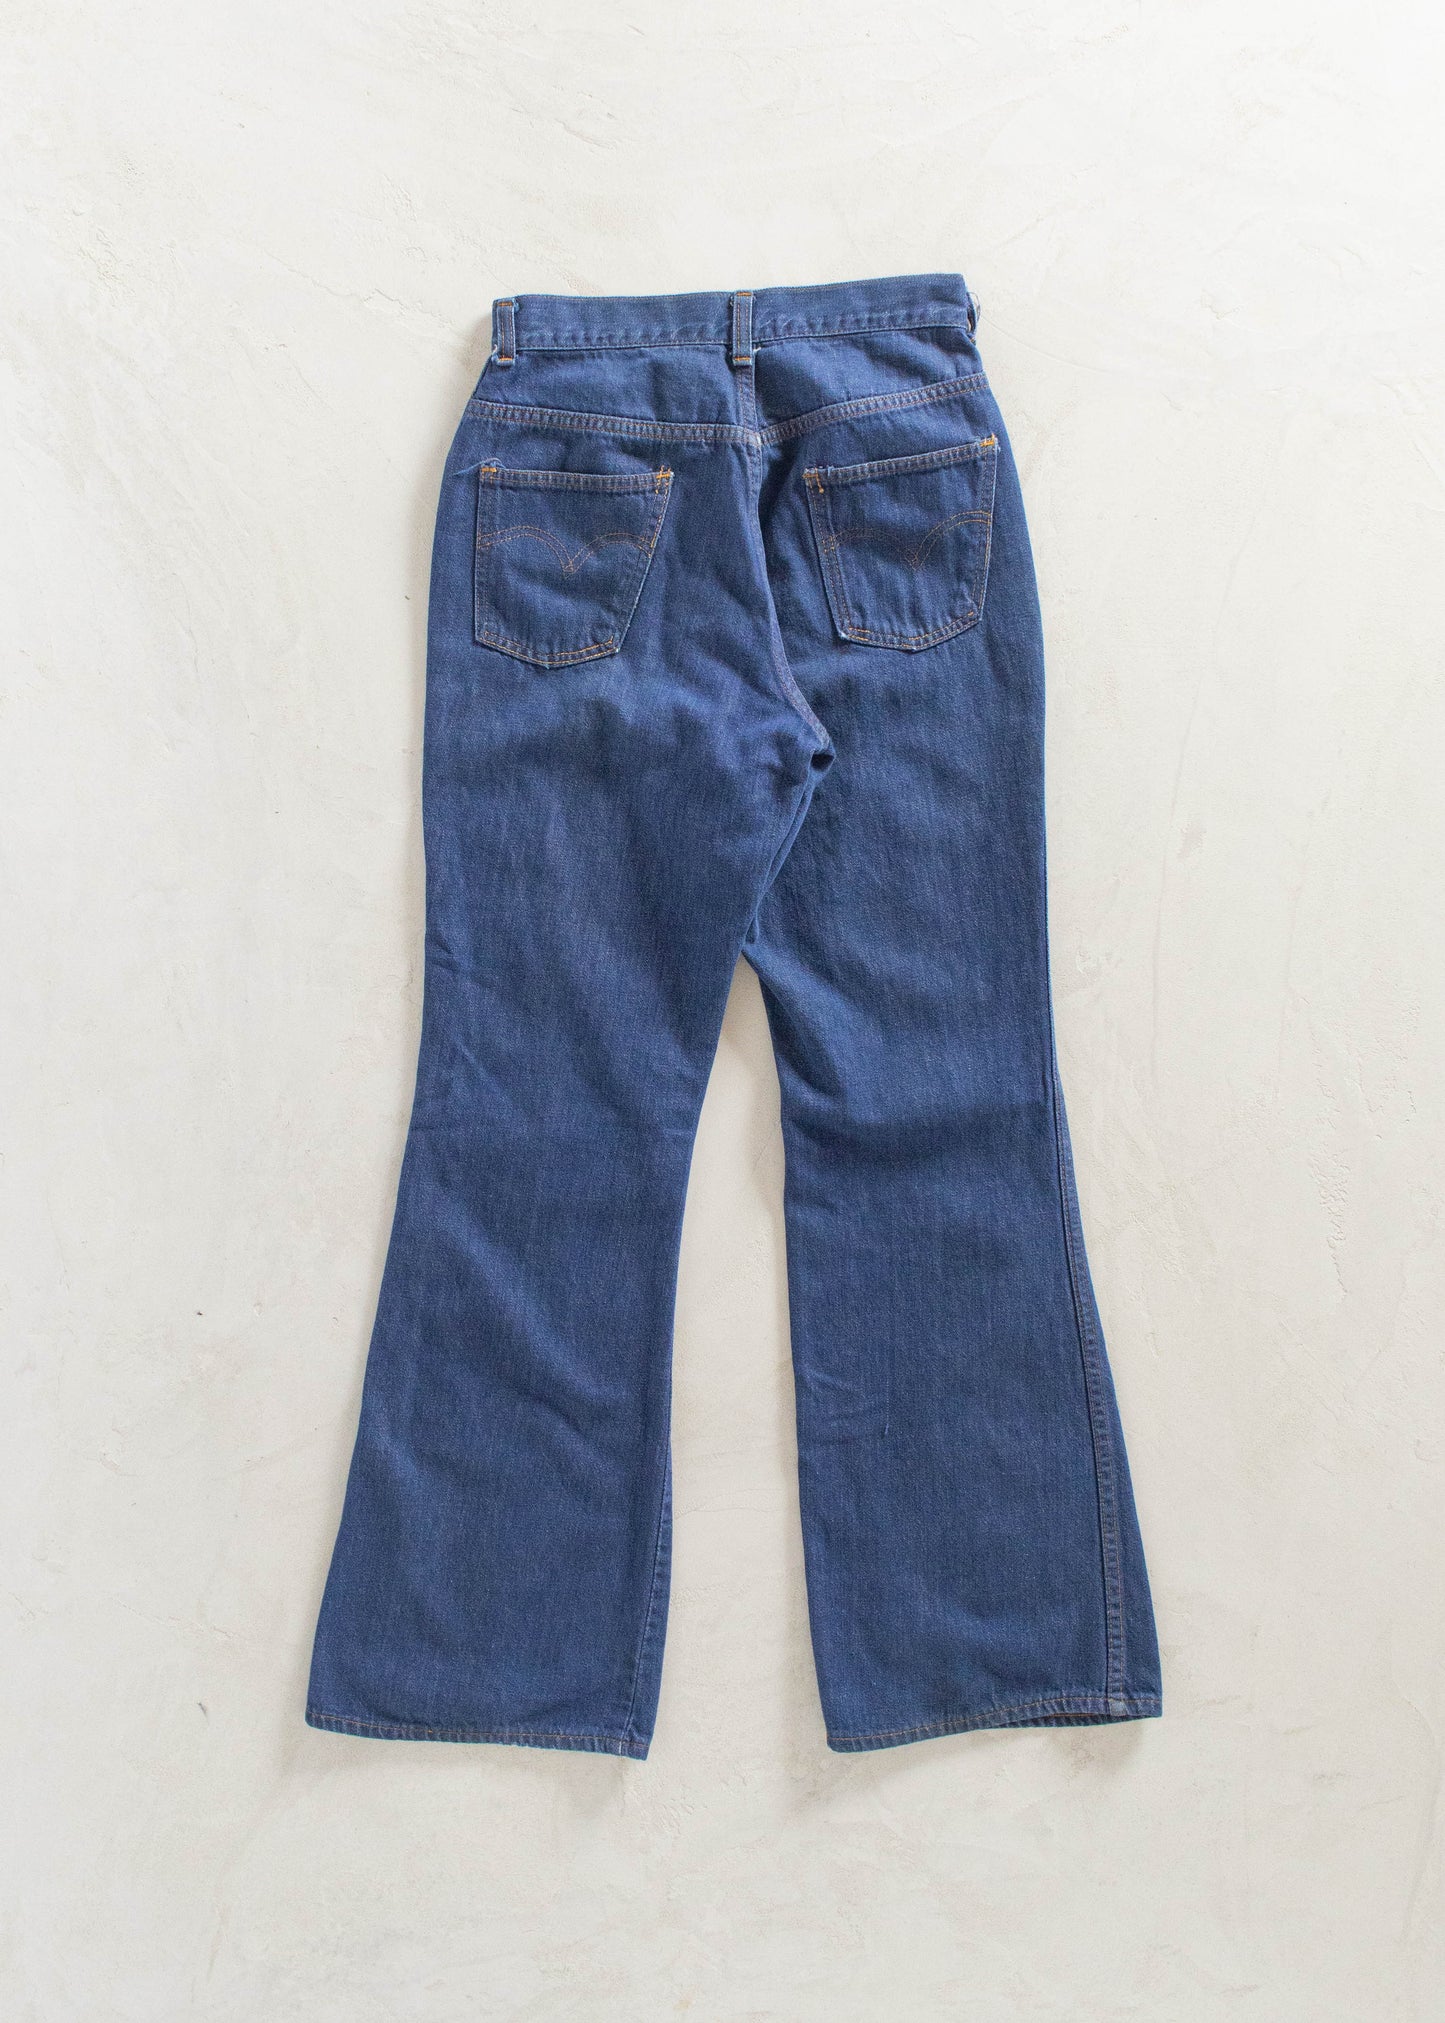 Vintage 1970s Levis Darkwash Flare Jeans Size Women's 24 Men's 28